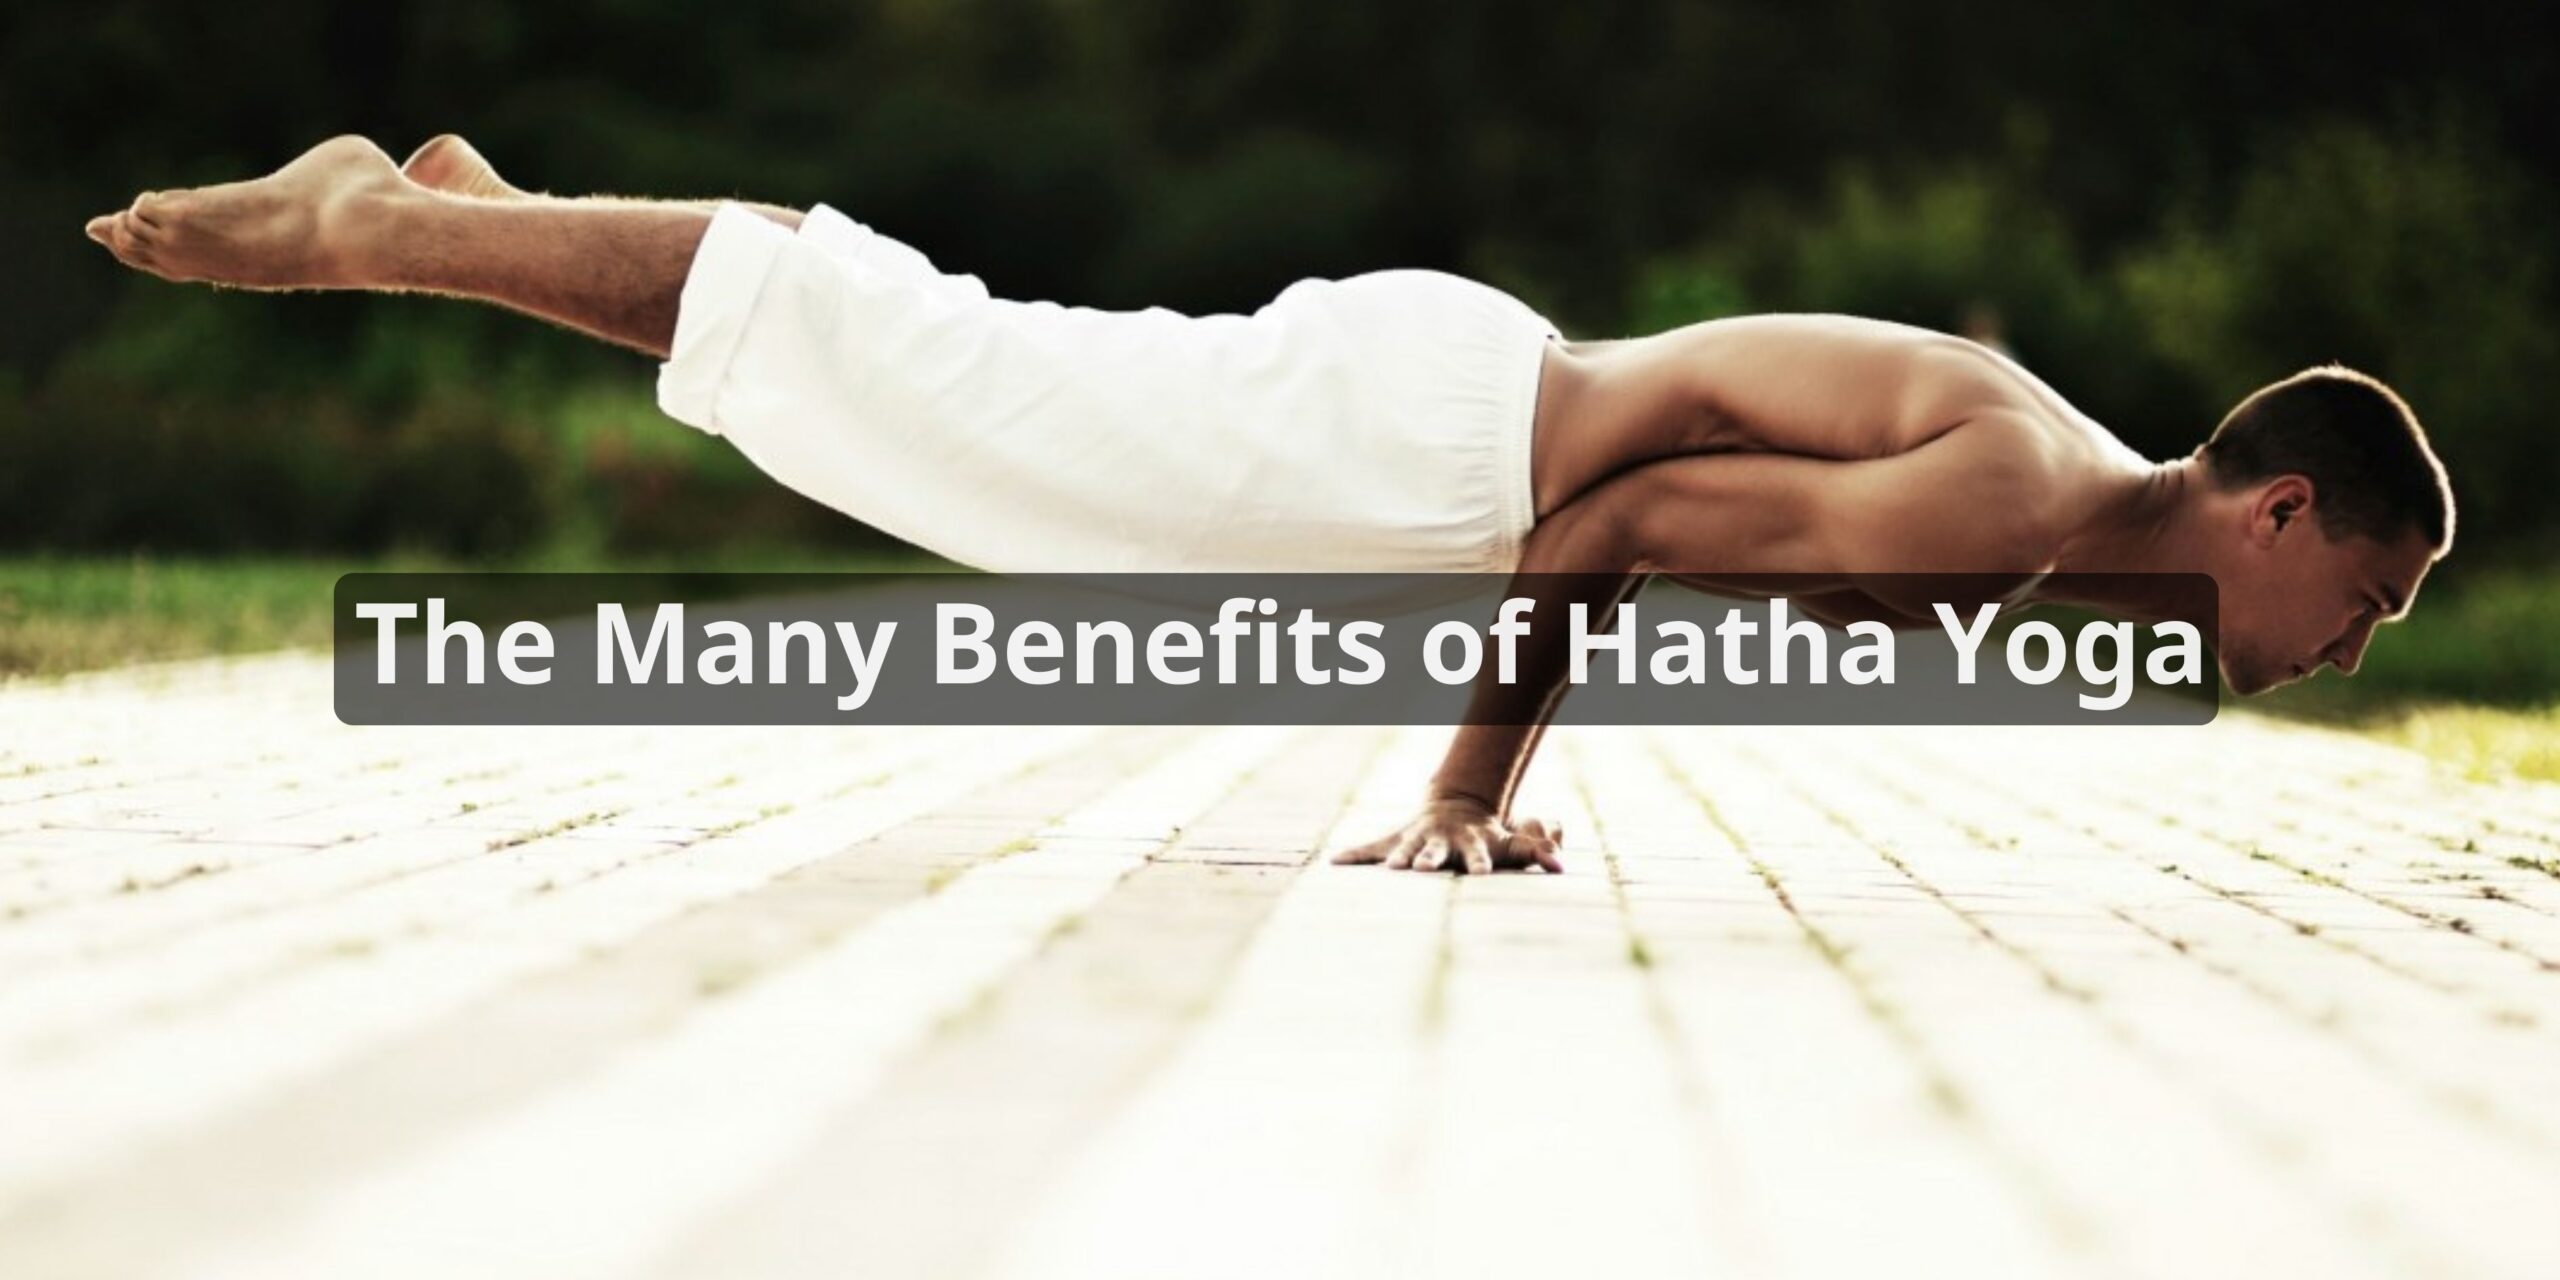 The Many Benefits of Hatha Yoga